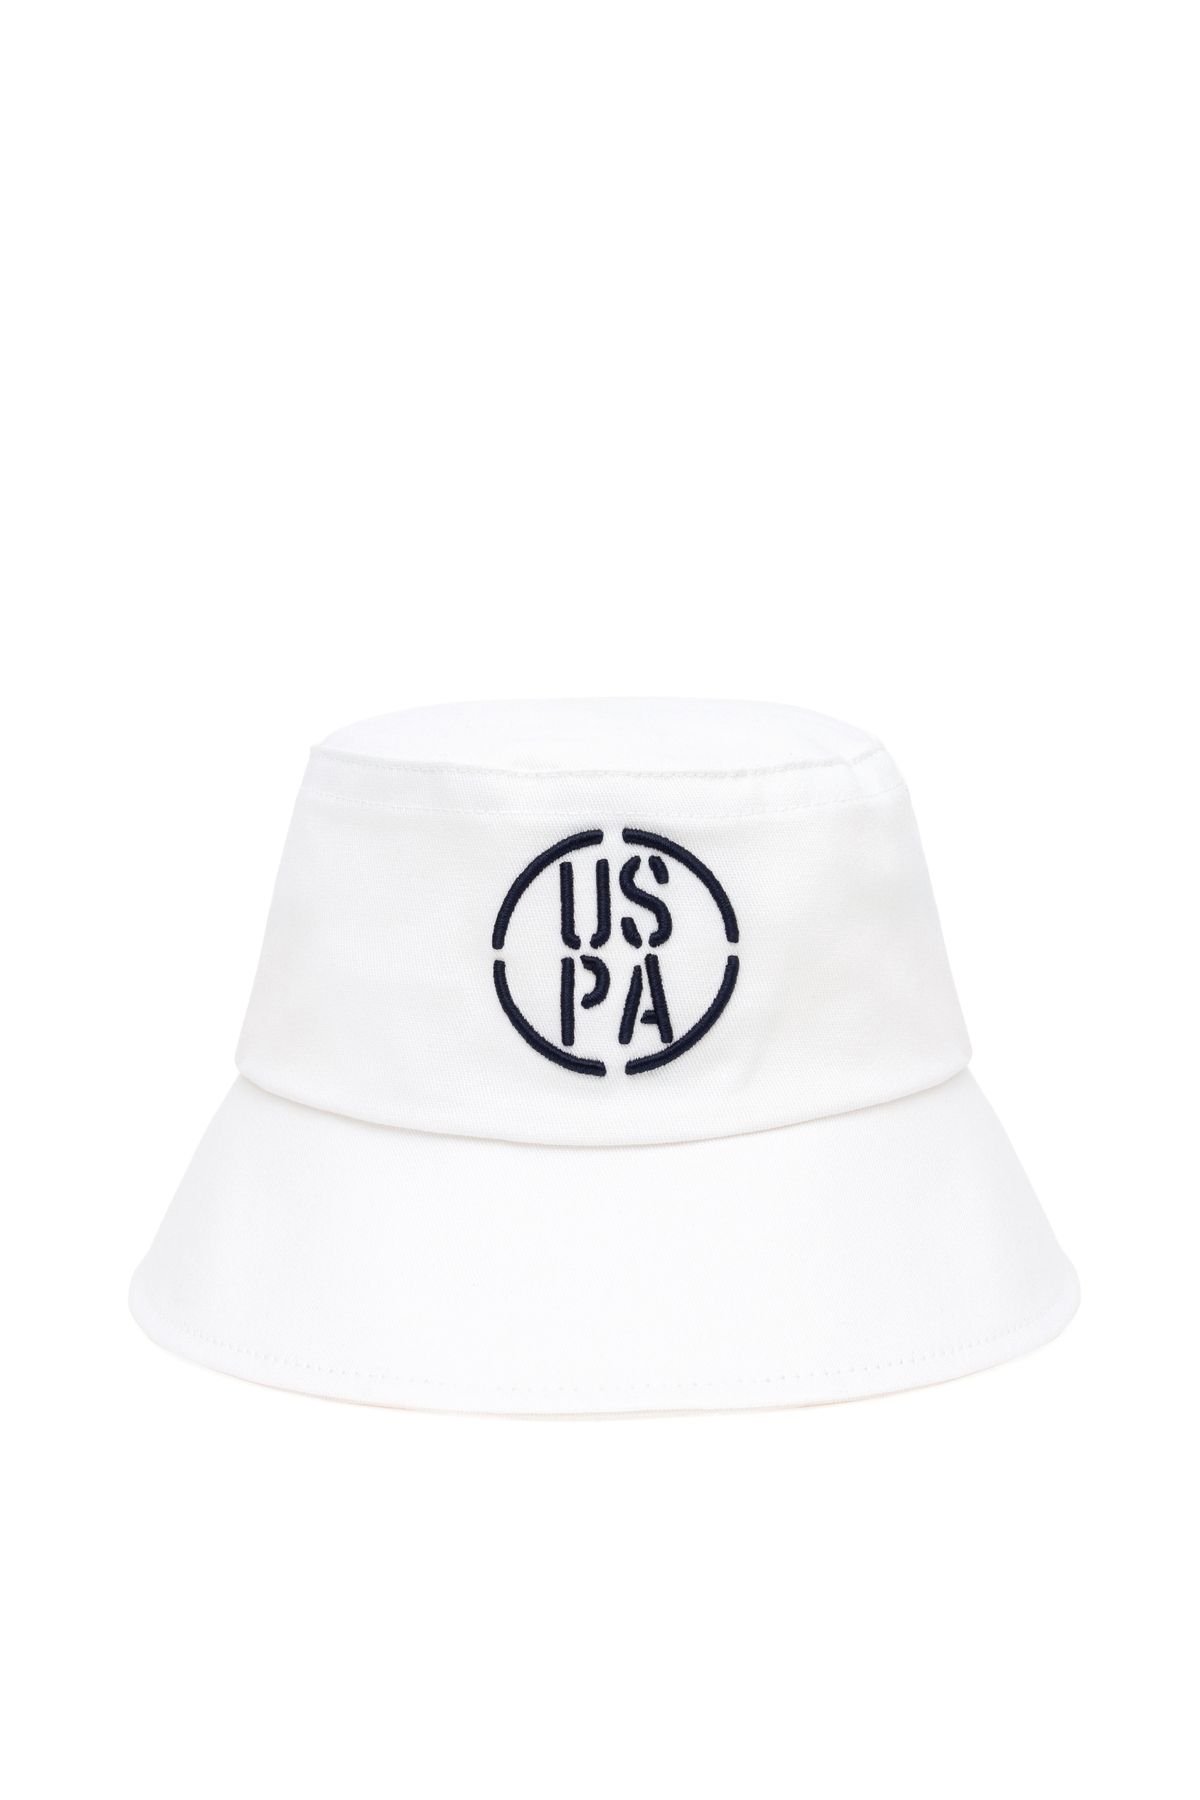 U.S. Polo Assn. Erkek Beyaz Şapka 50289083-VR013